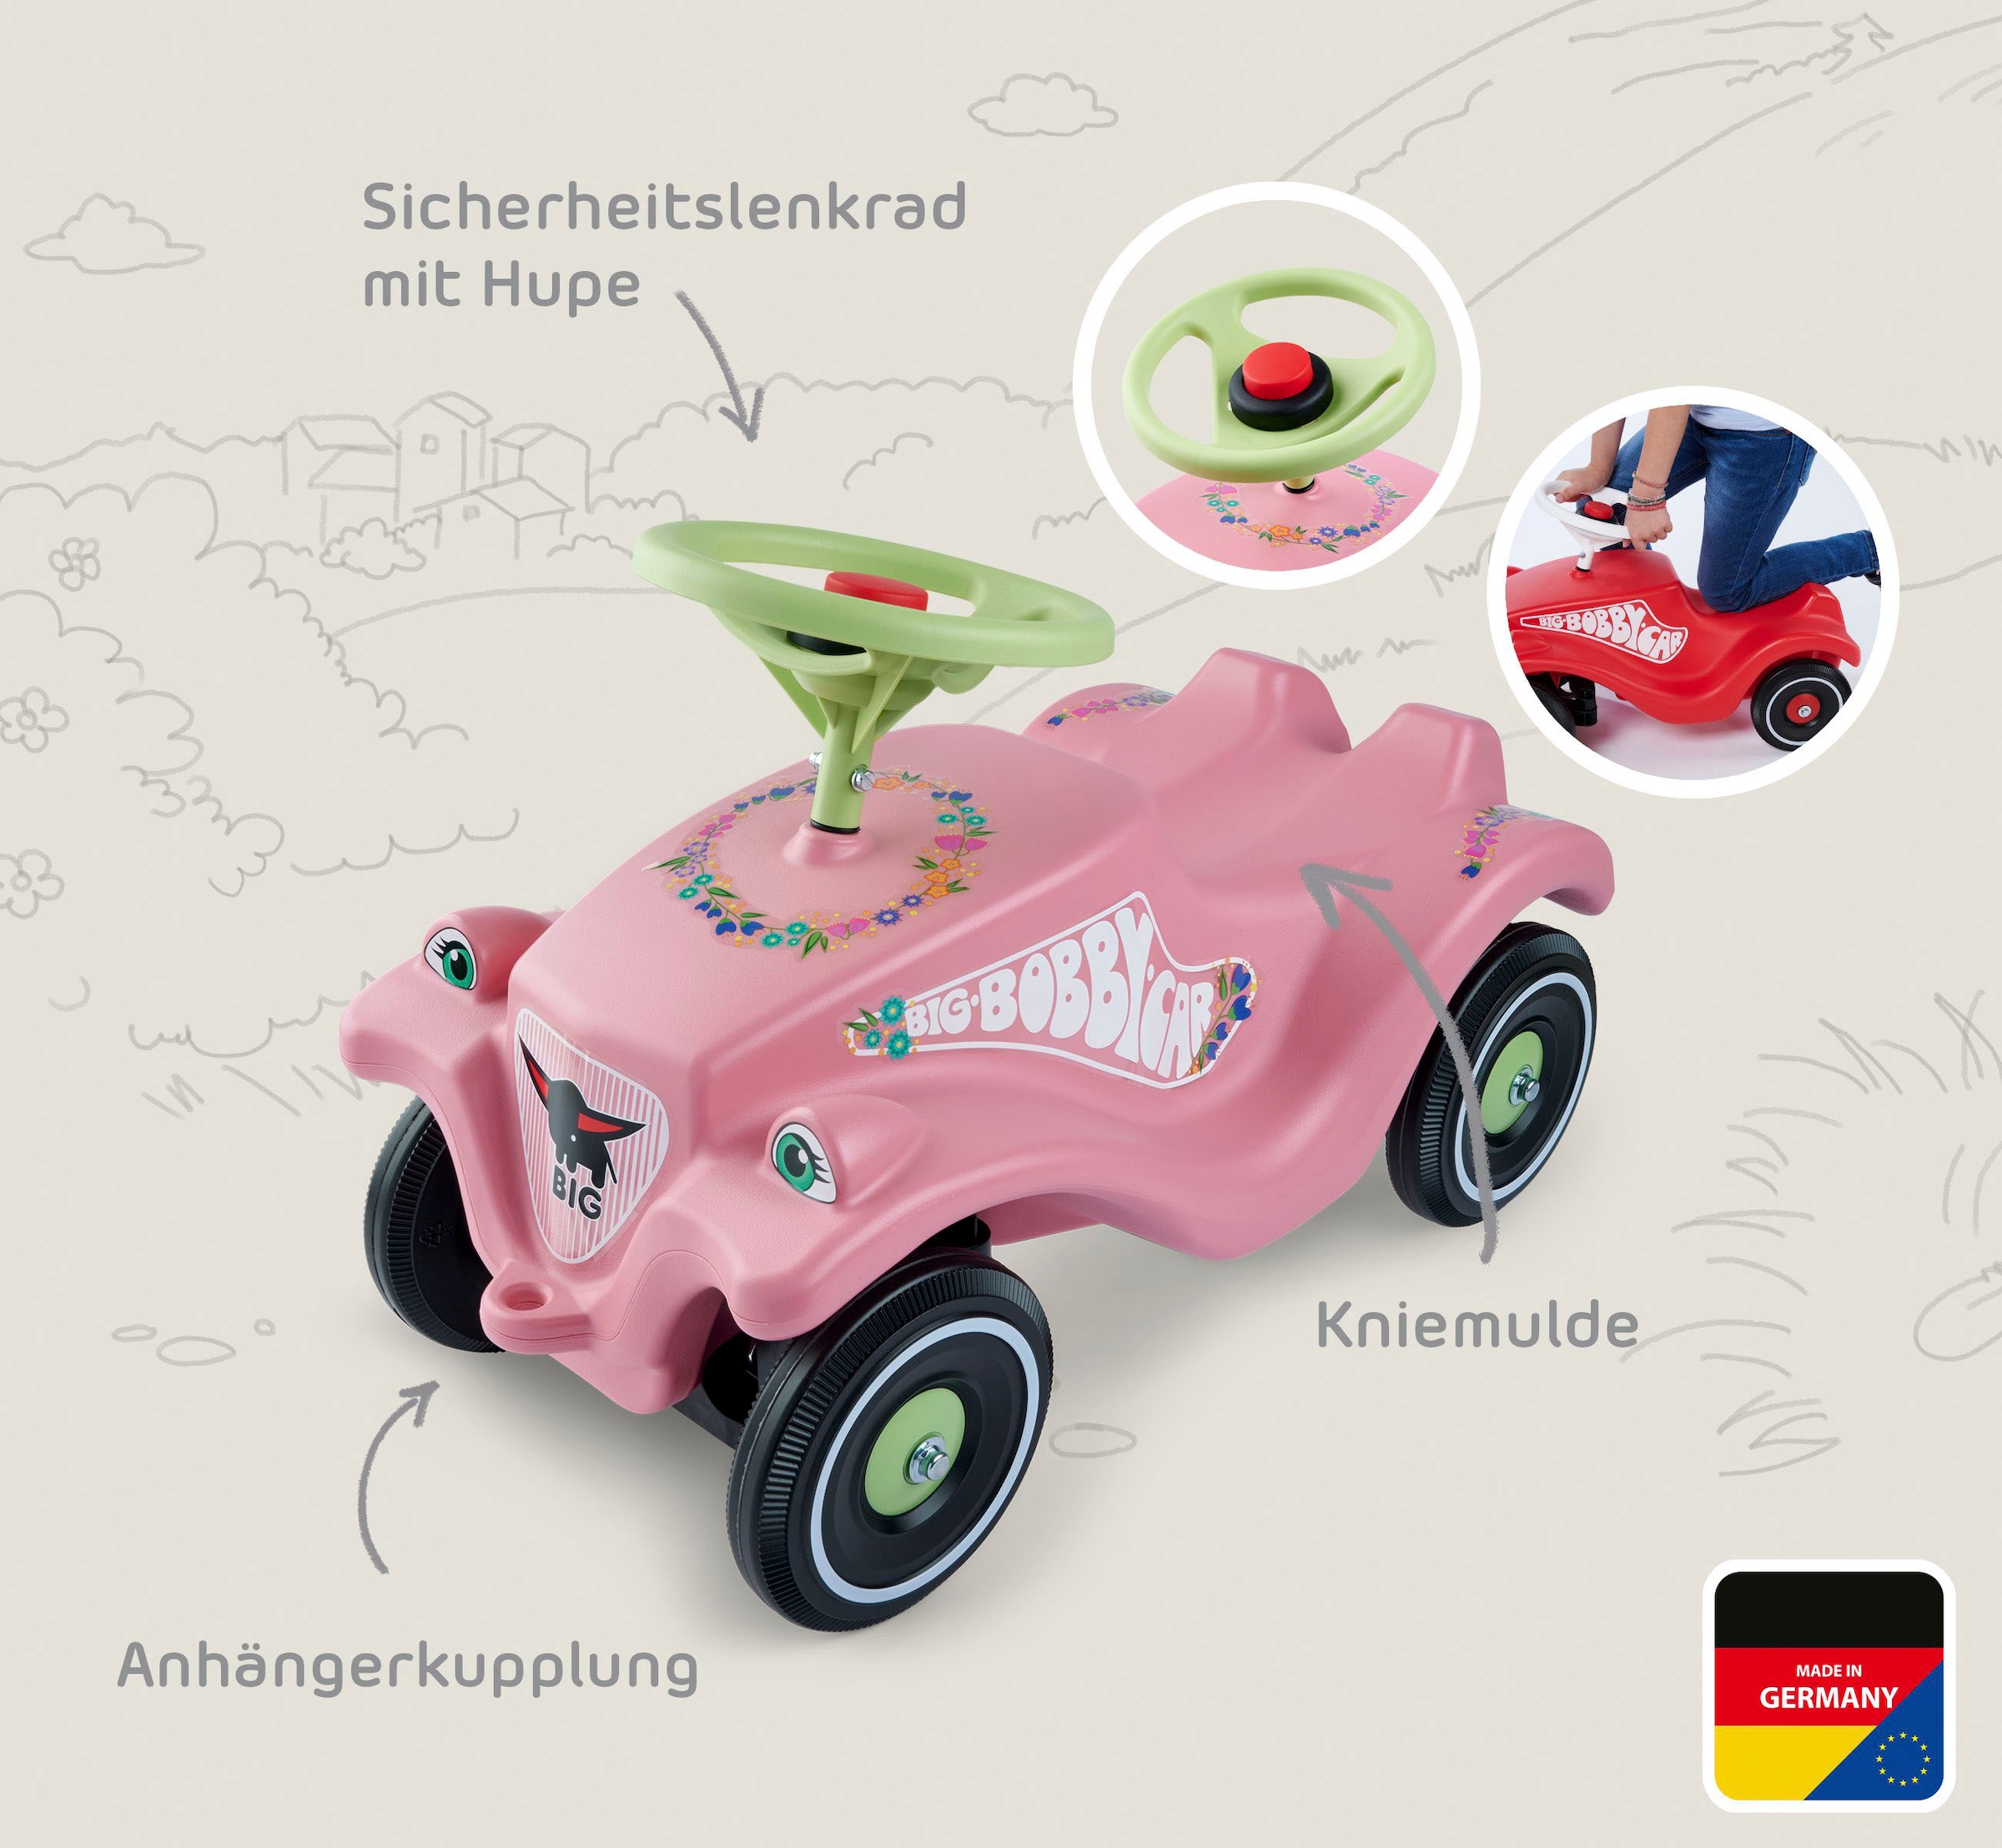 ✵ BIG Rutscherauto »BIG Bobby Car Classic Flower«, Made in Germany günstig  kaufen